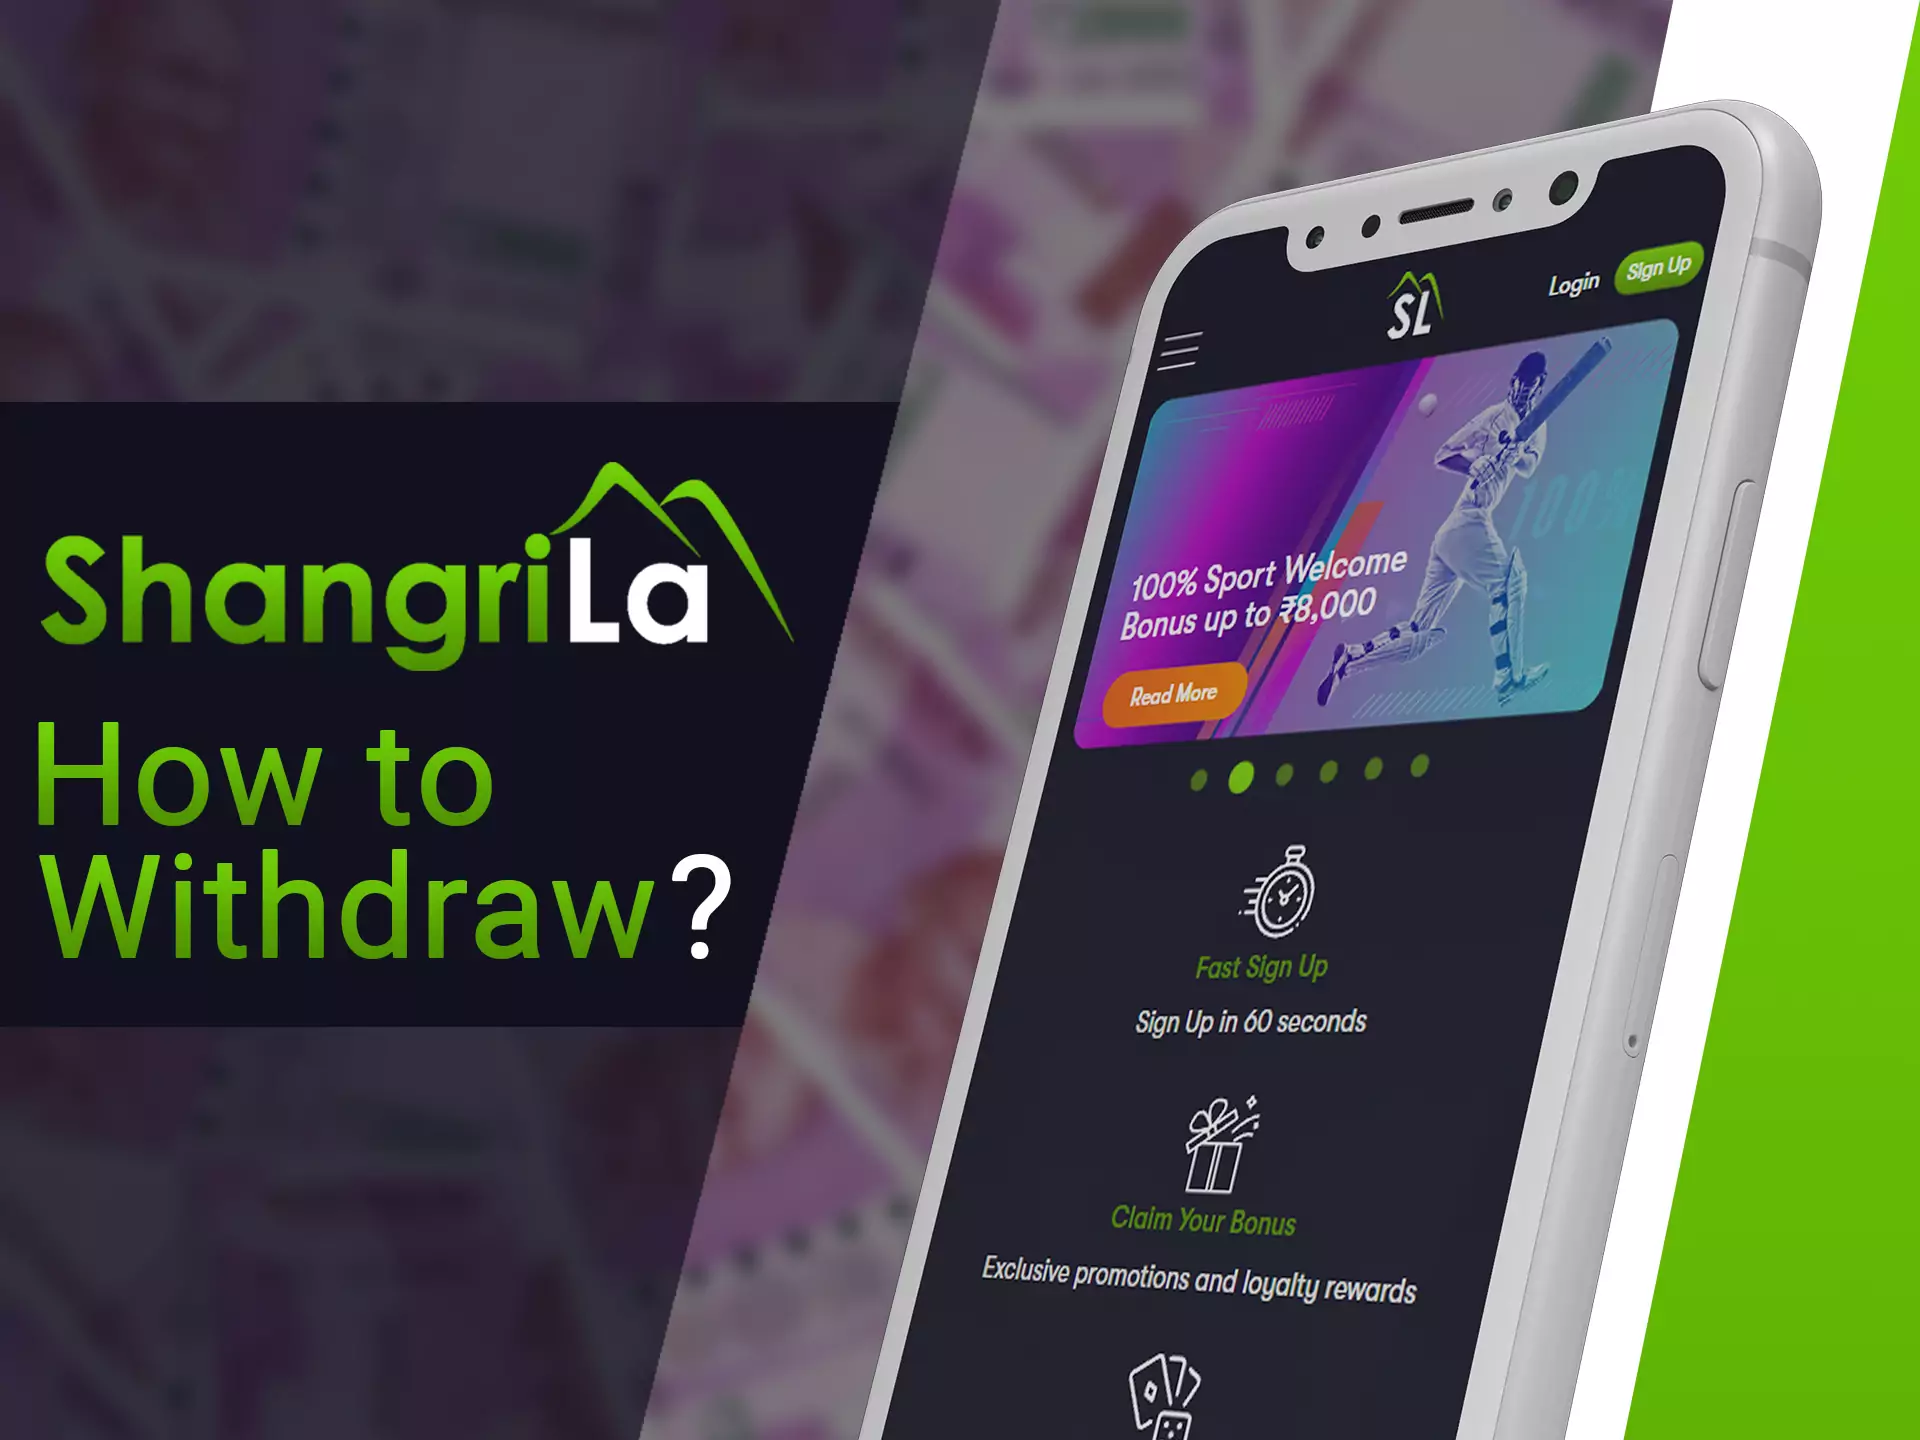 Fast withdrawal using the Shangri La app is guaranteed.